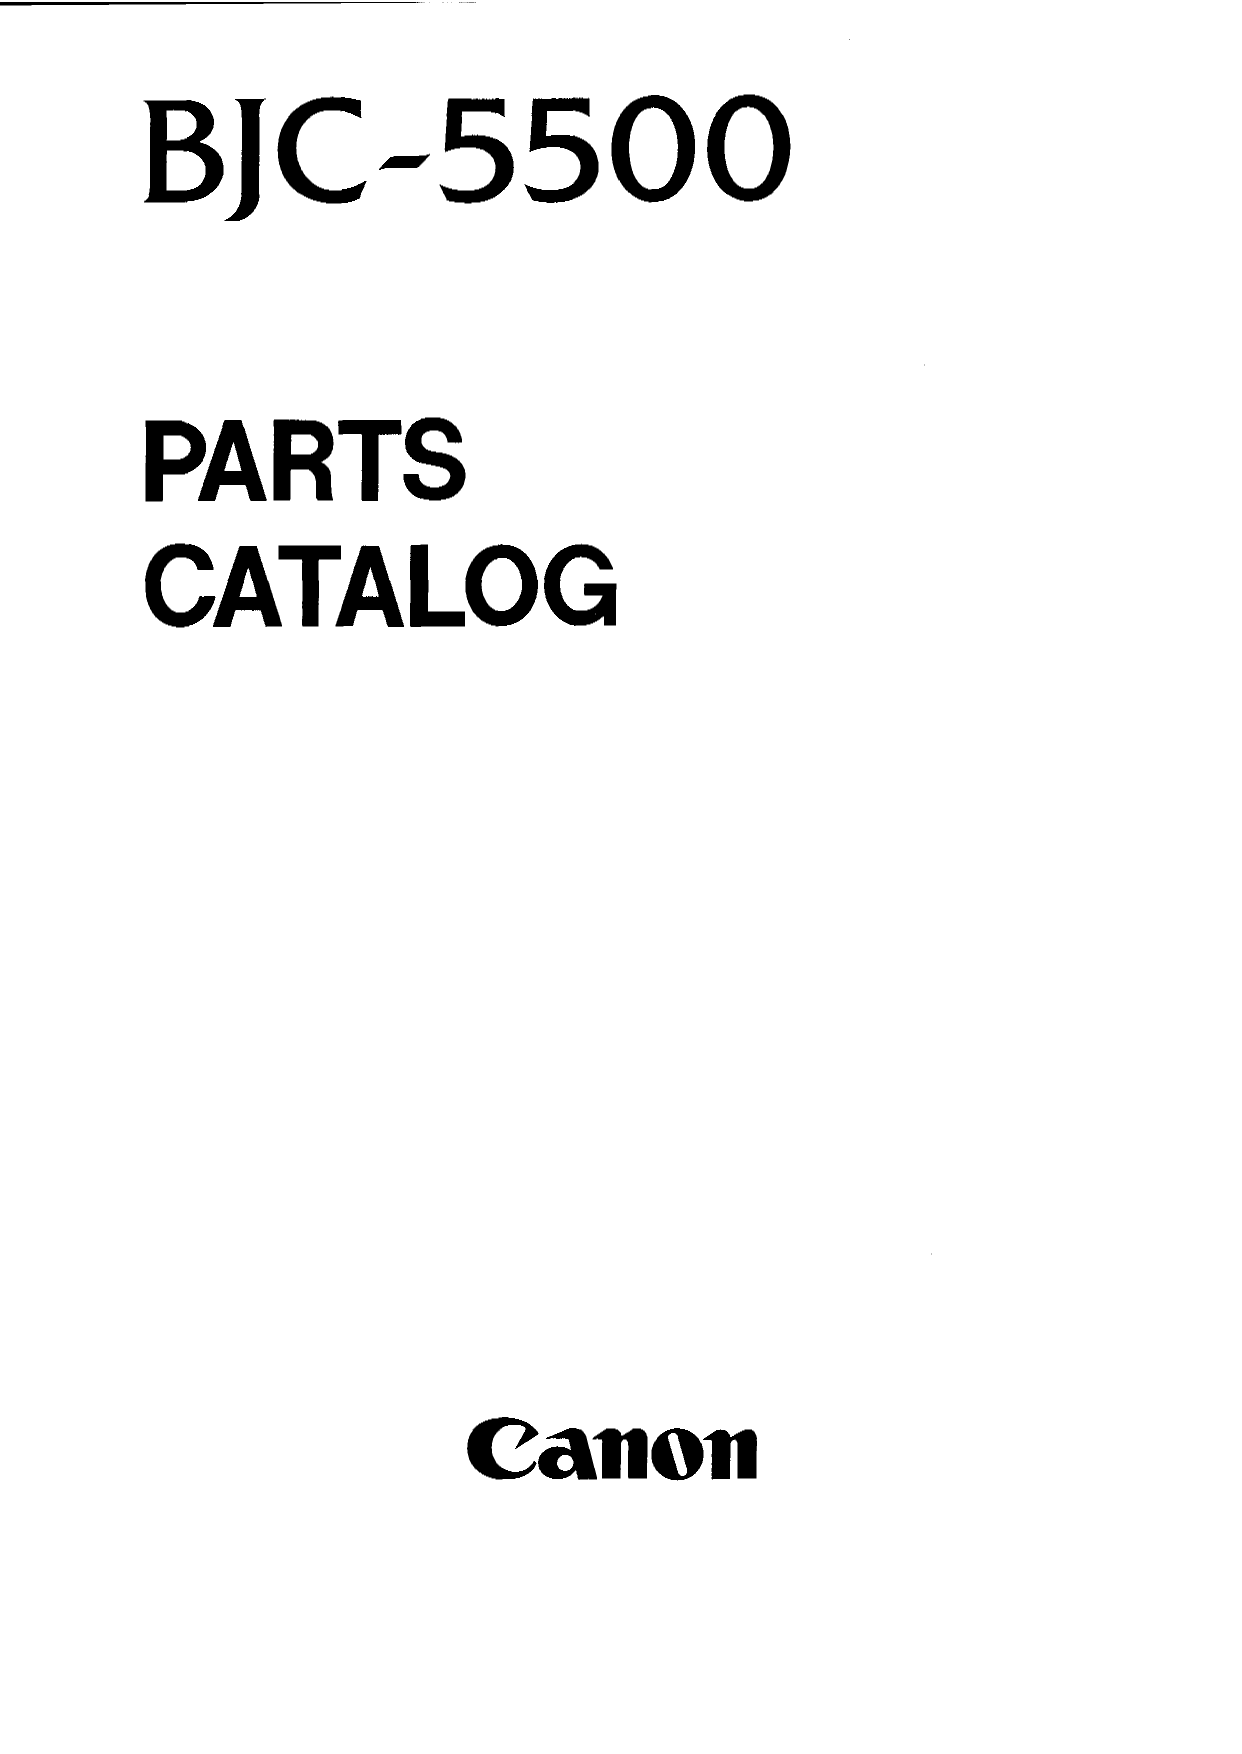 Canon BubbleJet BJC-5500 Parts Catalog Manual-1